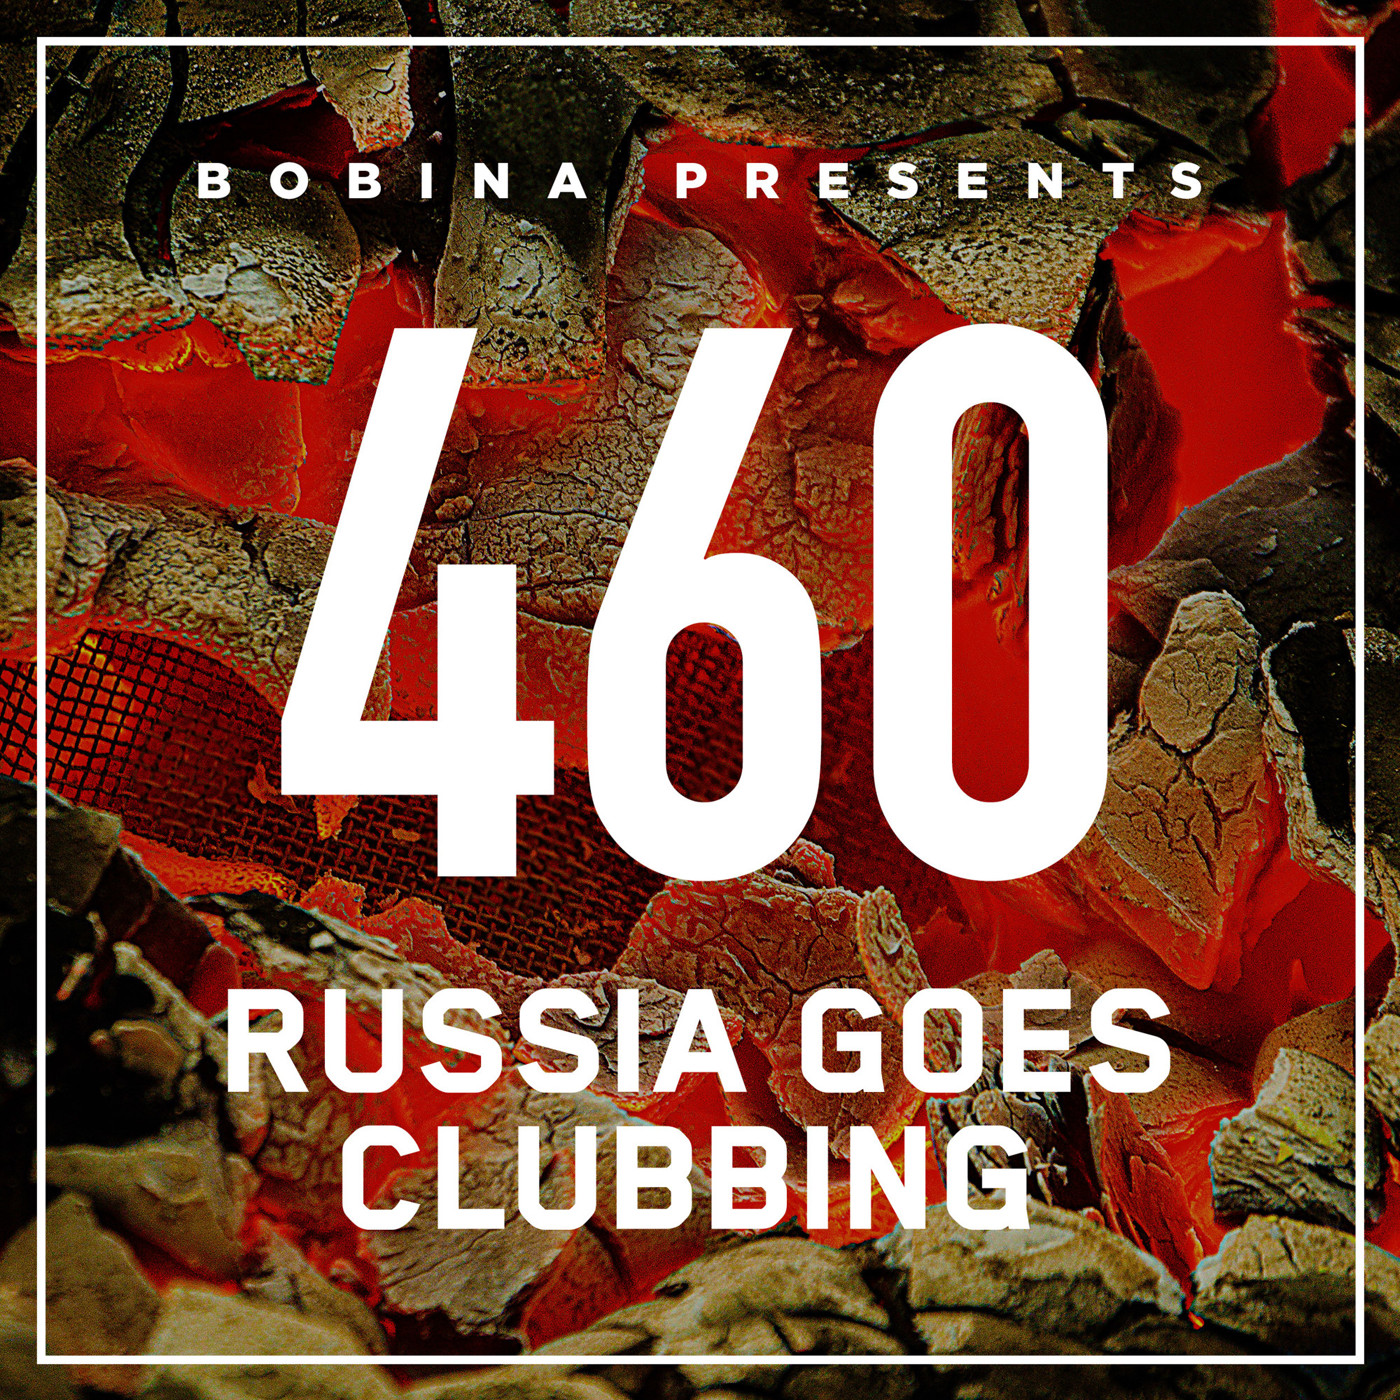 Bobina – Nr. 460 Russia Goes Clubbing (Rus)